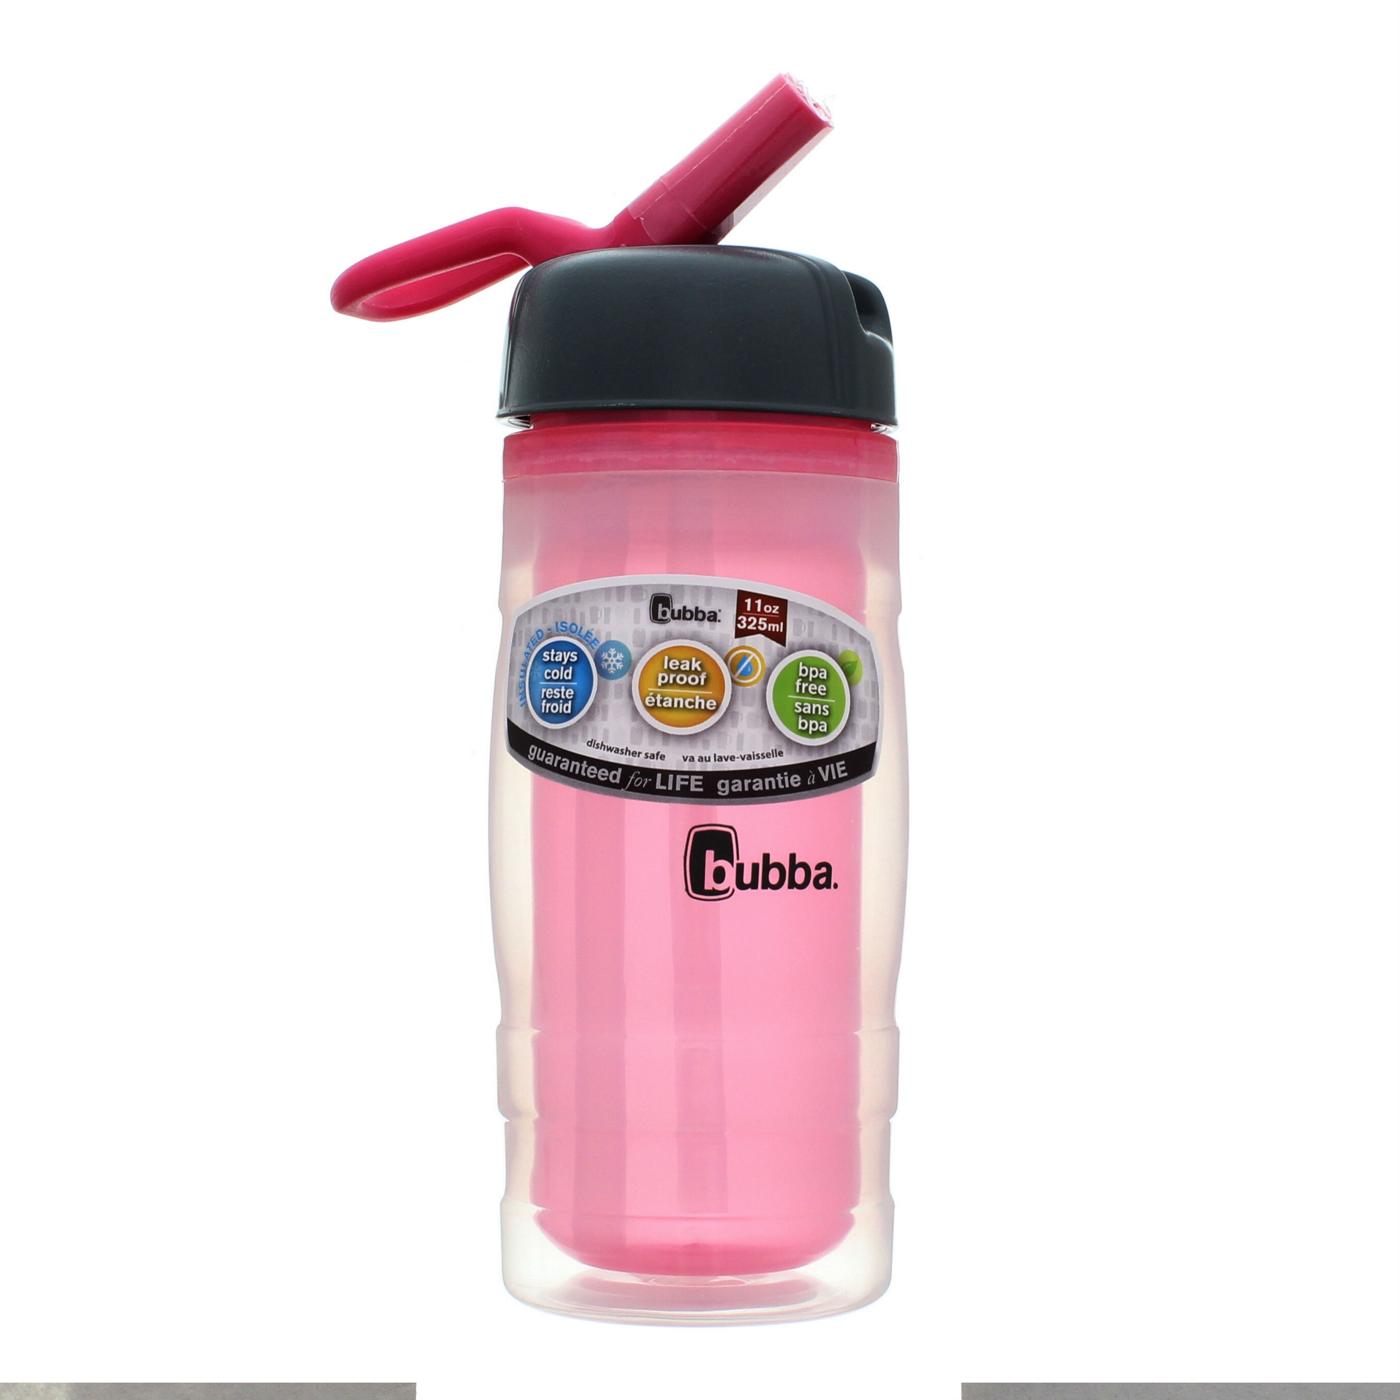 Bubba - Bubba, Raptor - Sport Bottle, Insulated, 11 oz, Shop